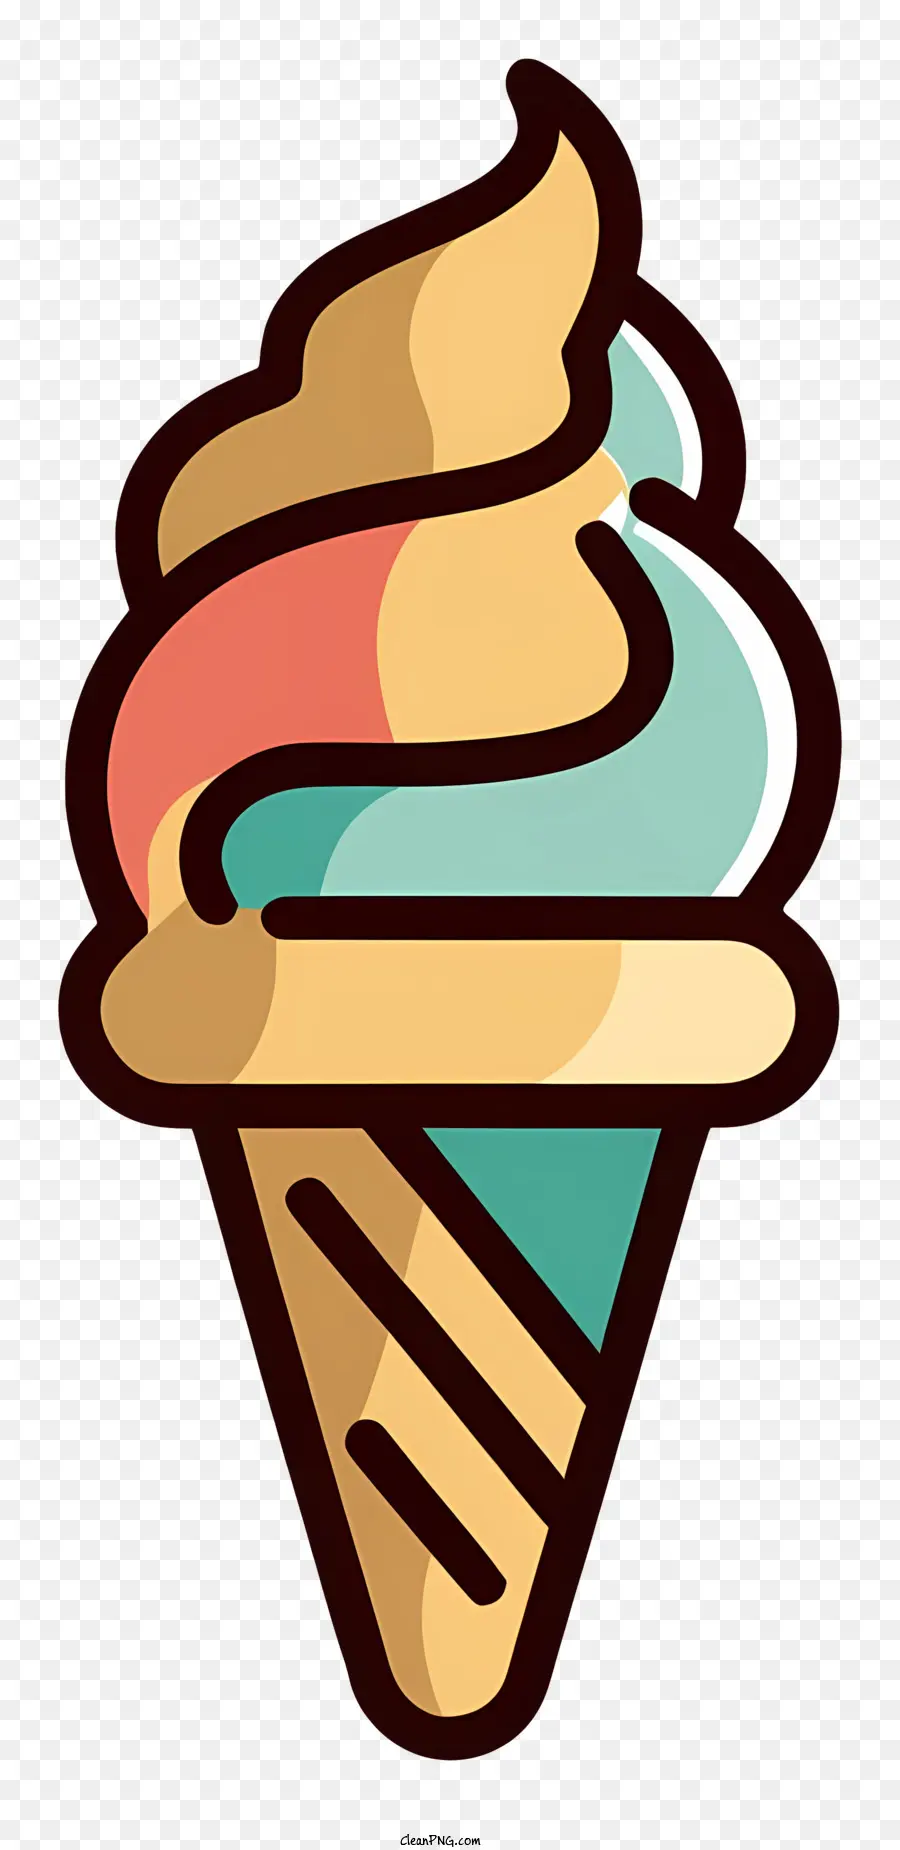 ice cream cone light brown ice cream dark brown ice cream brown and pink swirls cone